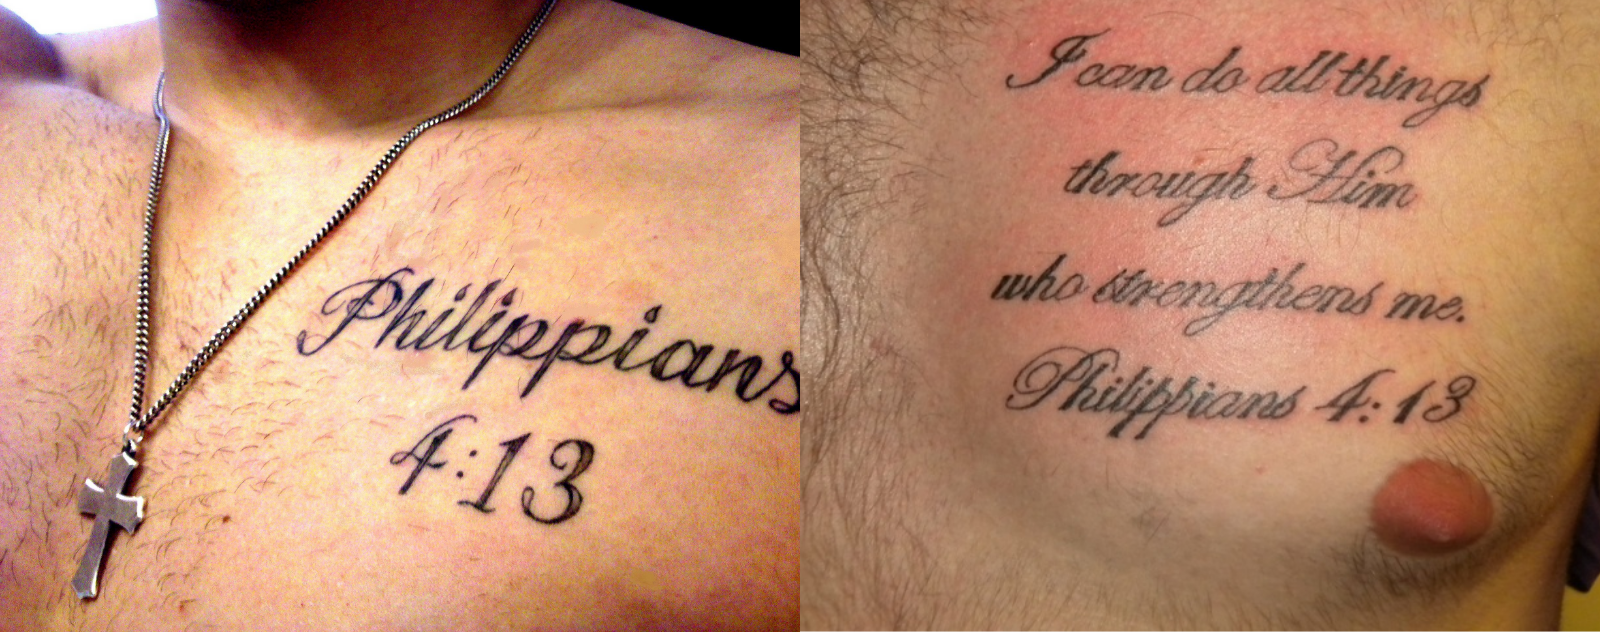 philippians-4-13-tattoo-chest-2